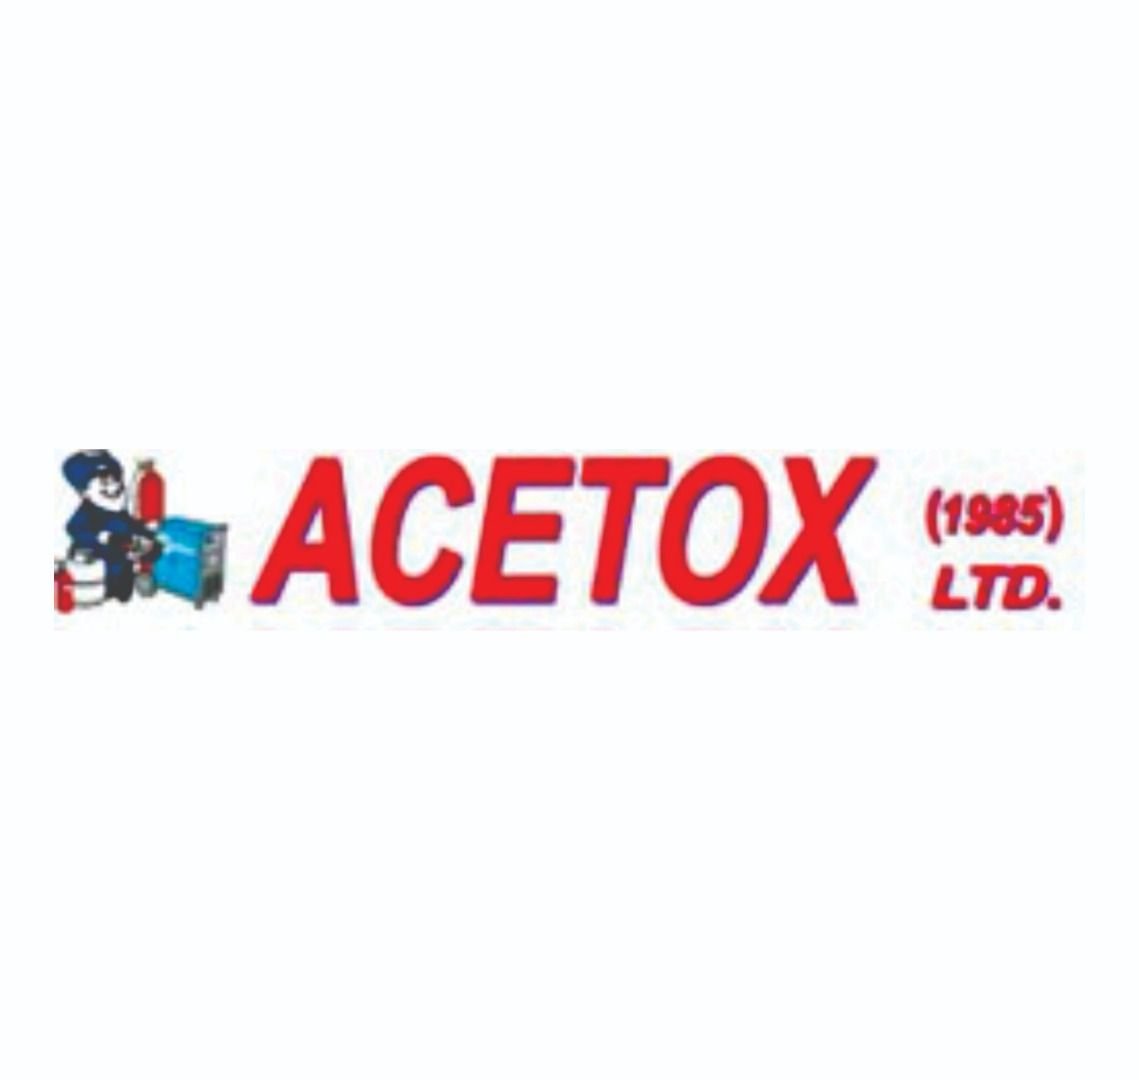 Acetox (1985) Ltd.